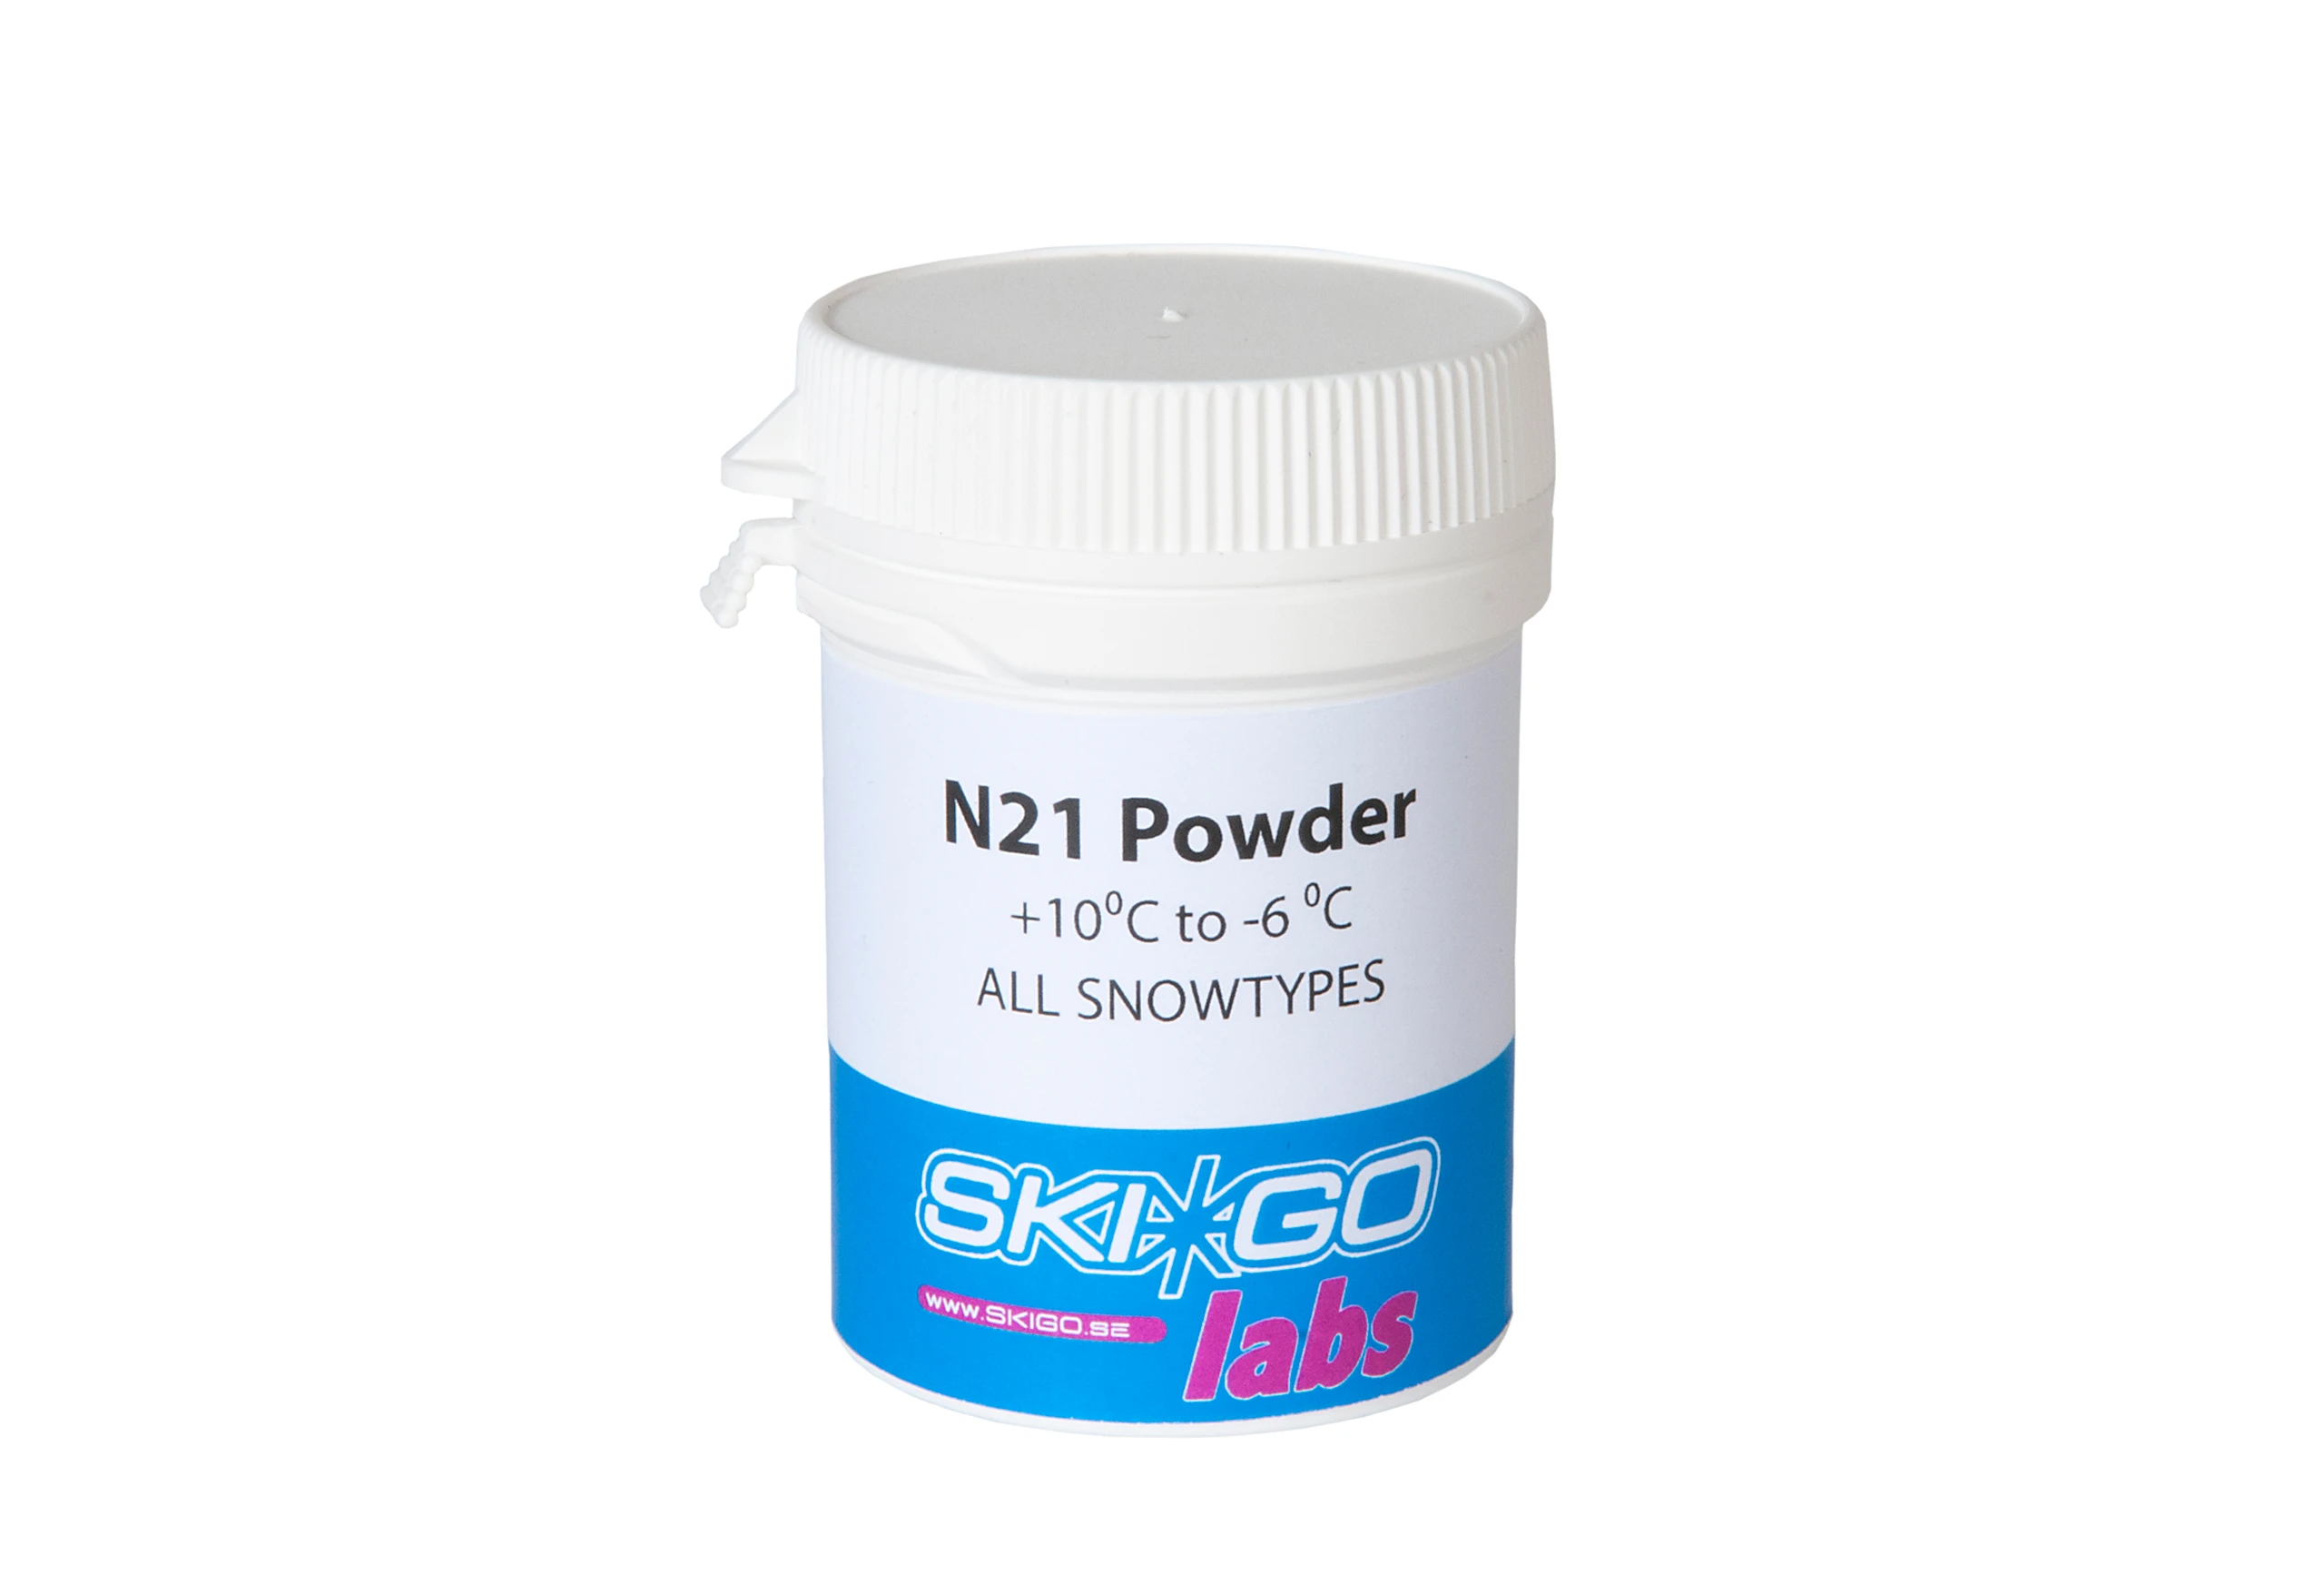 Skigo N21 POWDER